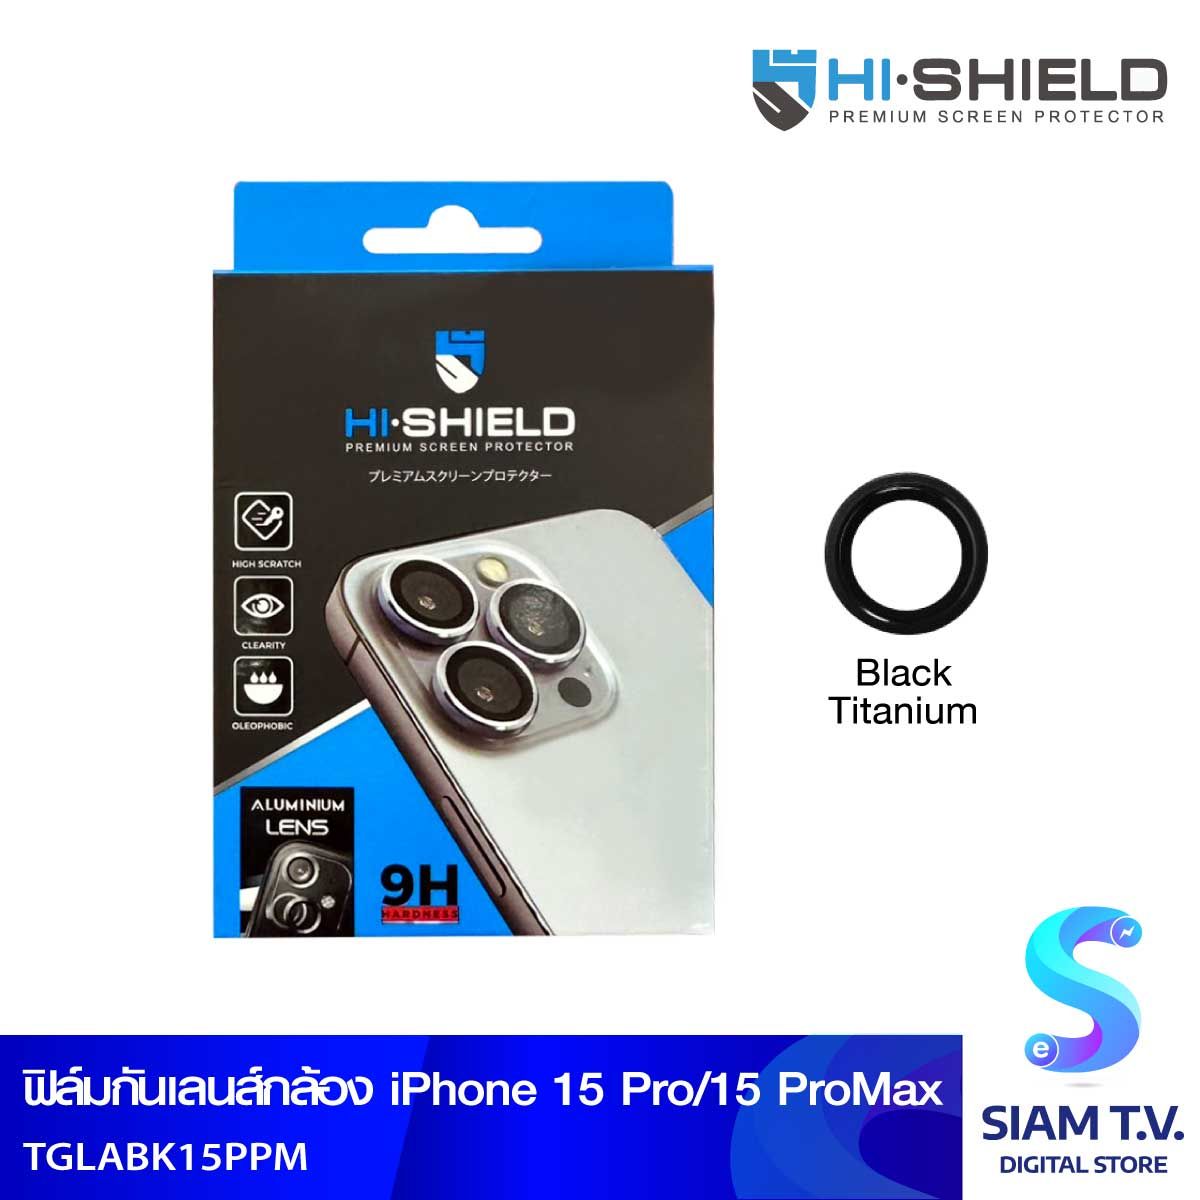 HISHIELD Aluminium Lens Black iPhone 15 Pro/ProMax